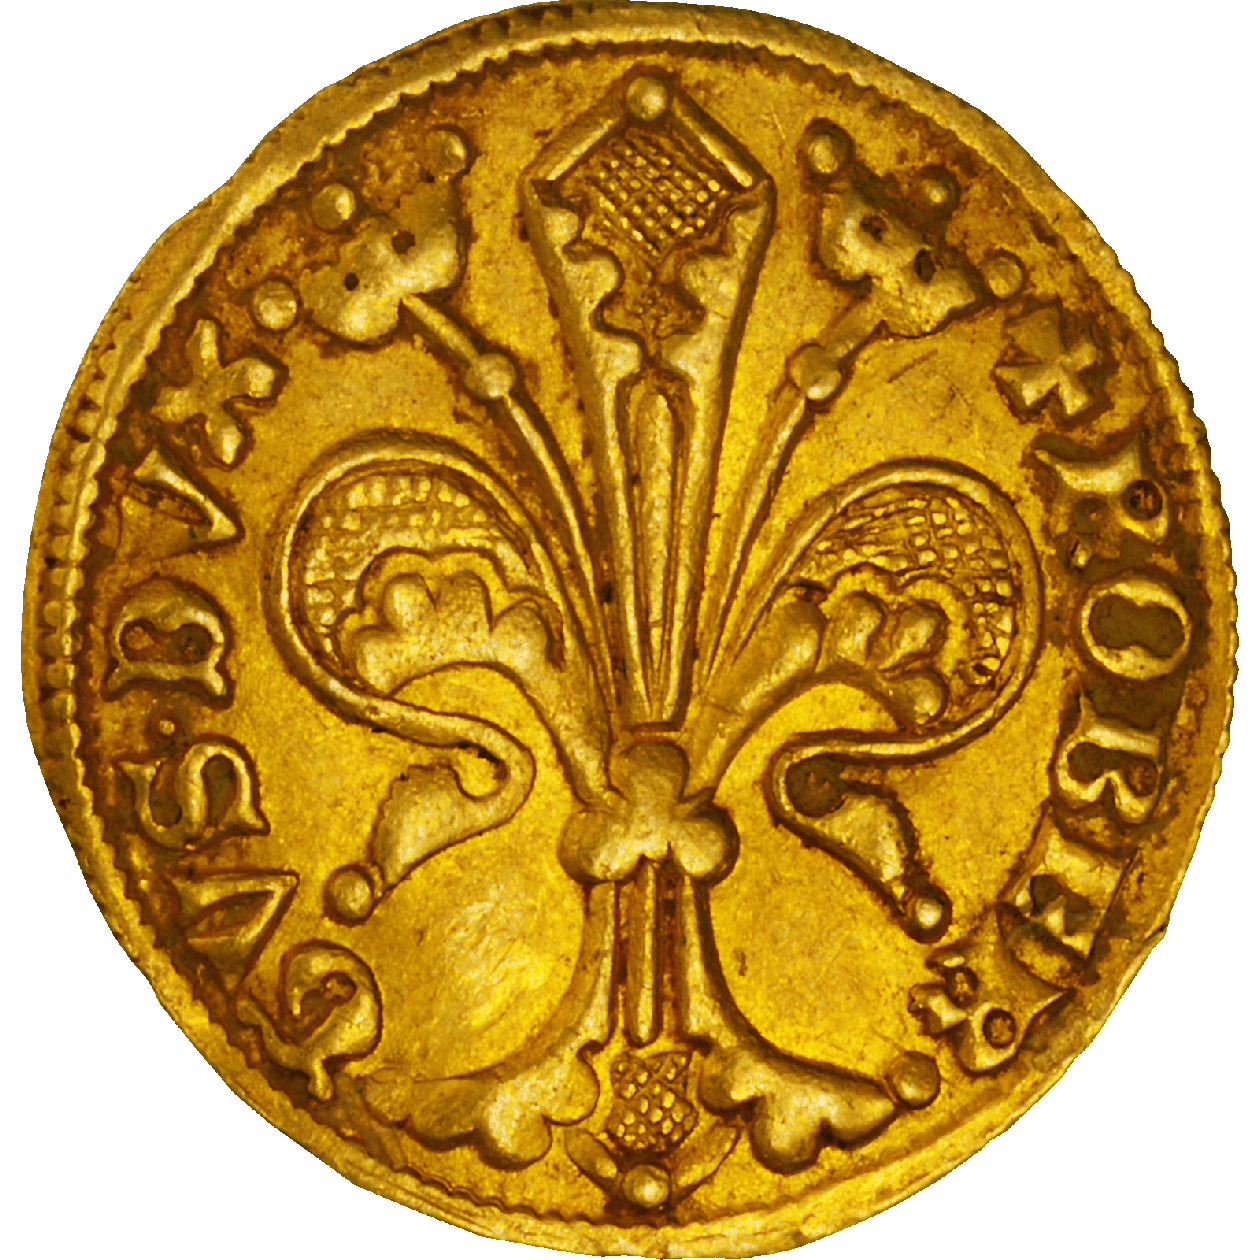 Frankreich, Herzogtum Bar, Robert I., Florin d'or (obverse)